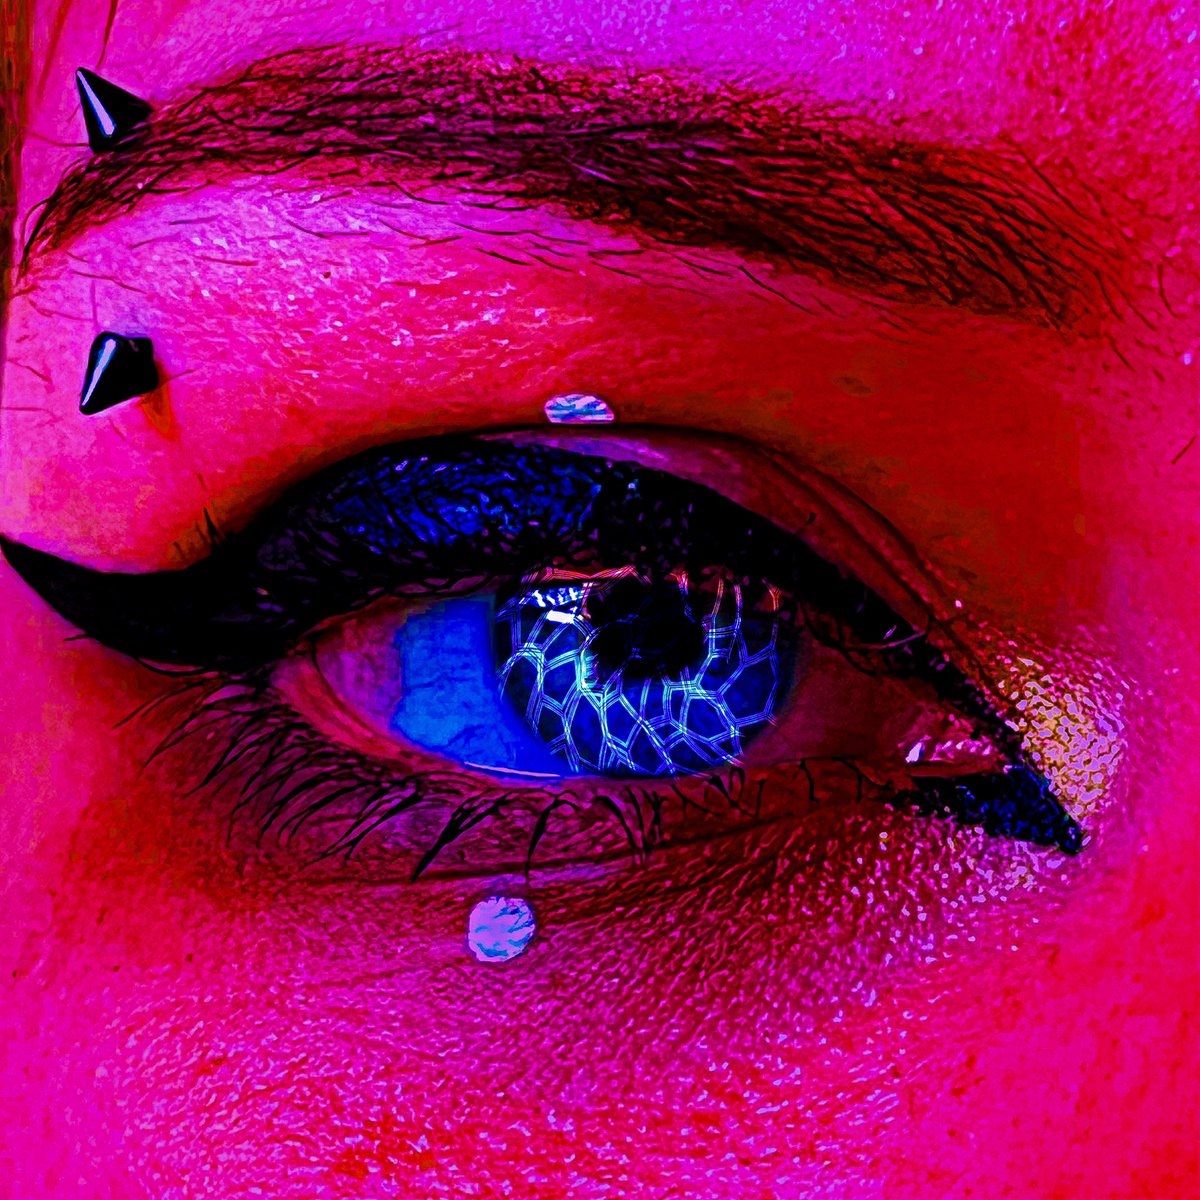 “echoes of the soul” 🌌👁️‍🗨️

made on @photoshop 
model: @emoxmoon 

#skxmfxck #digitalart #art #photoshop #eye #eyemakeup #eyeart #alternative #alt #newmedia #photography #graphicartist #adobe #creative #piercing #saturation #vibrance #graphicart #emogirl #lightroom